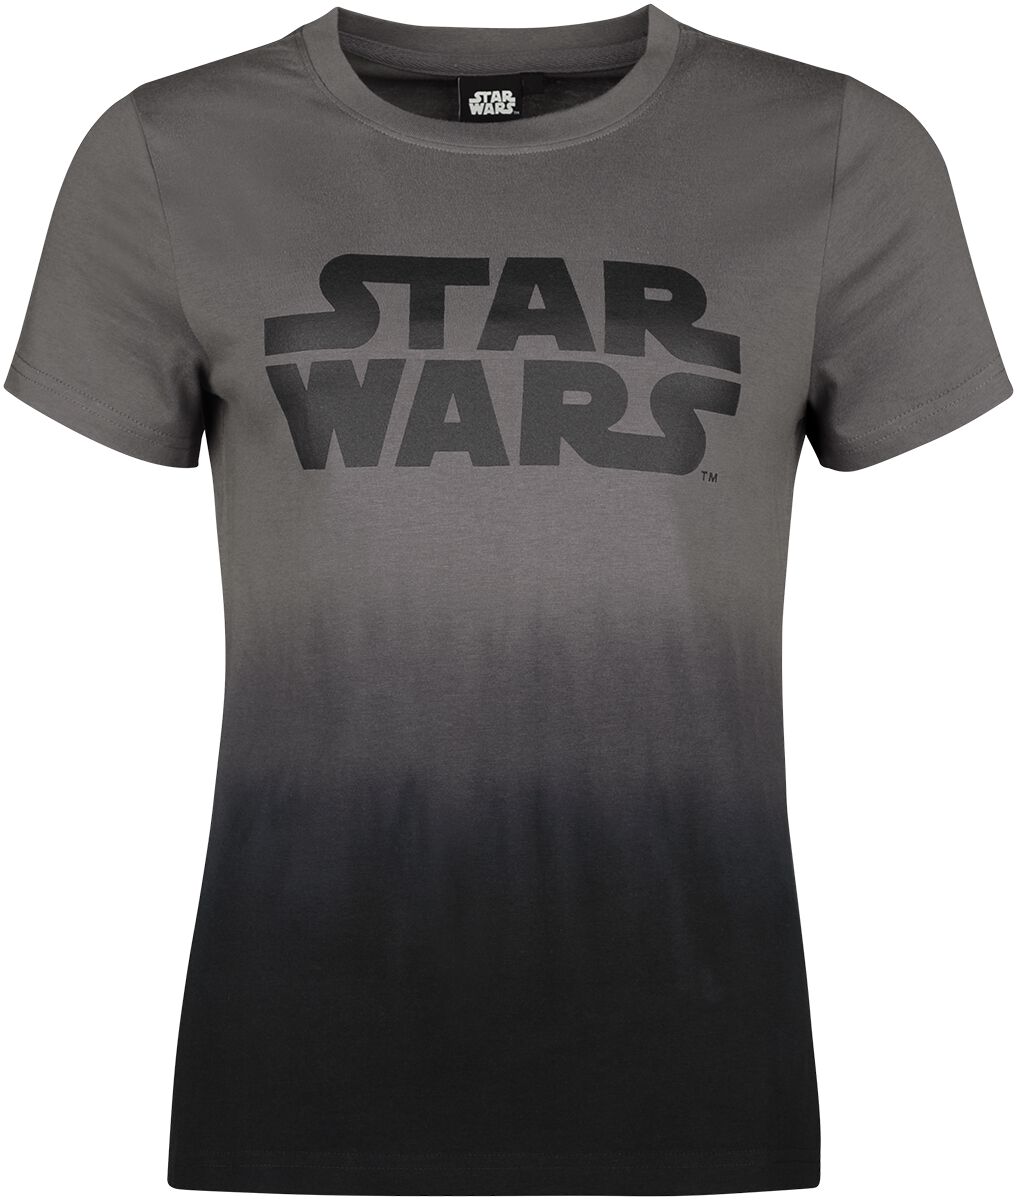 Star Wars Star Wars T-Shirt multicolor in XL